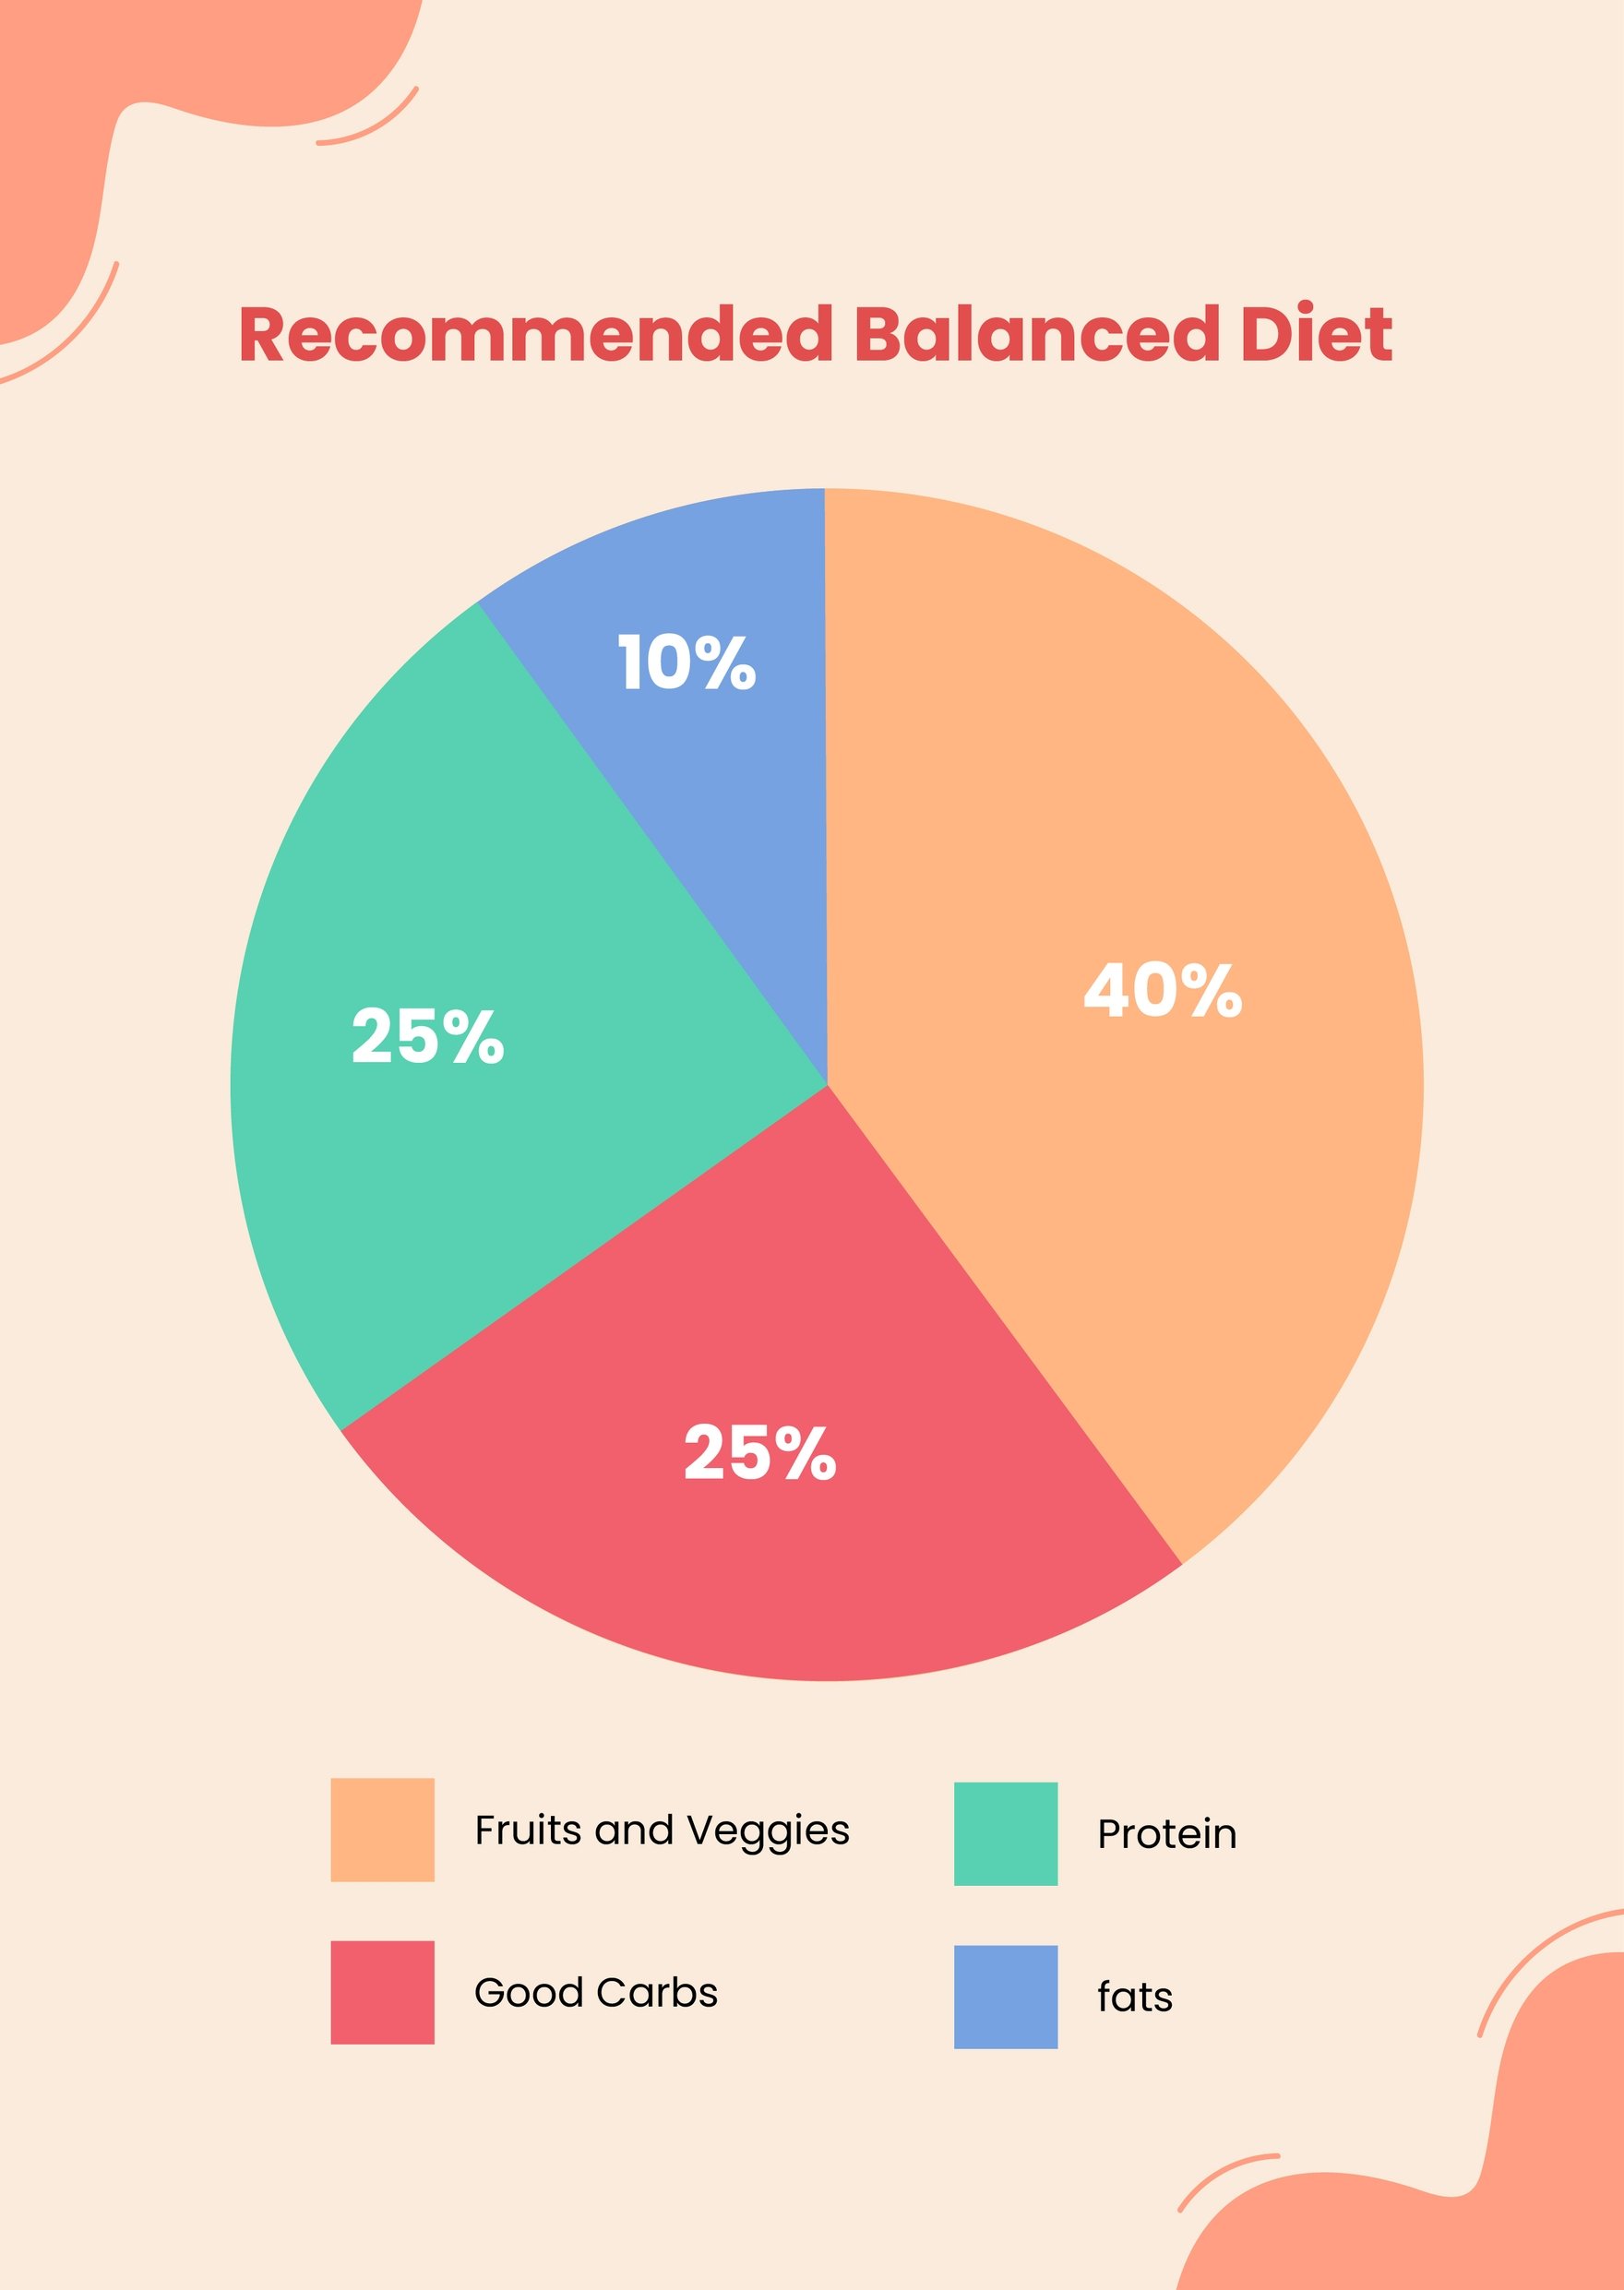 Diet Recommendation Pie Chart Template